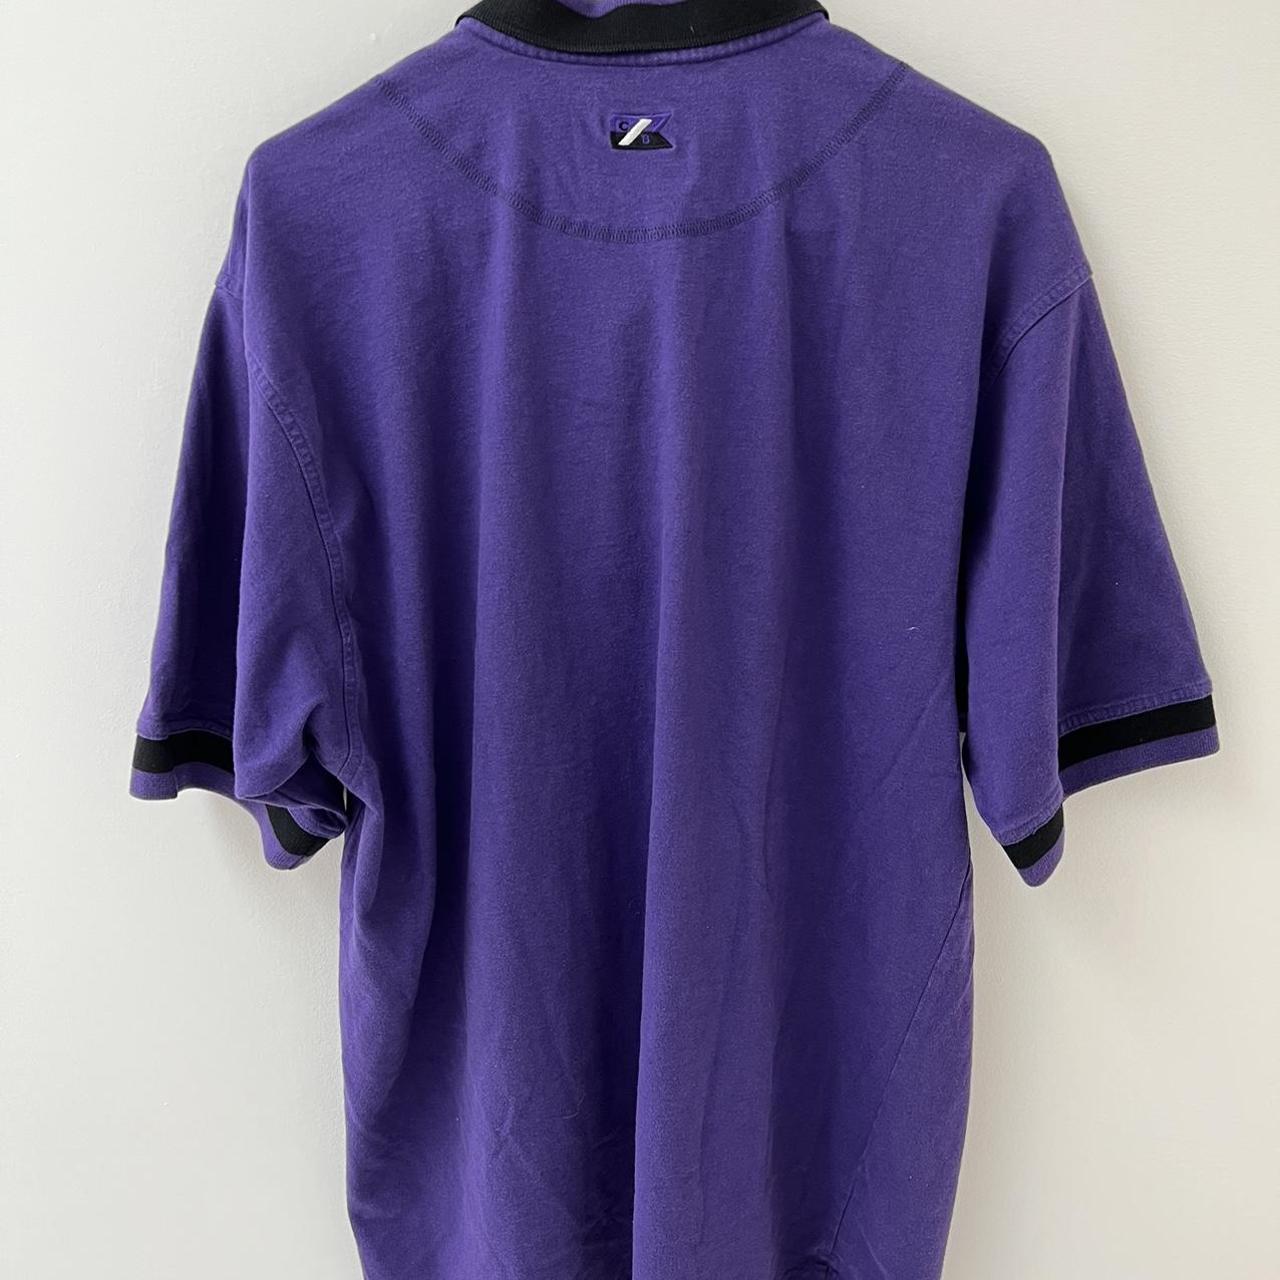 Cutter & Buck Men's Purple and Black Polo-shirts (4)